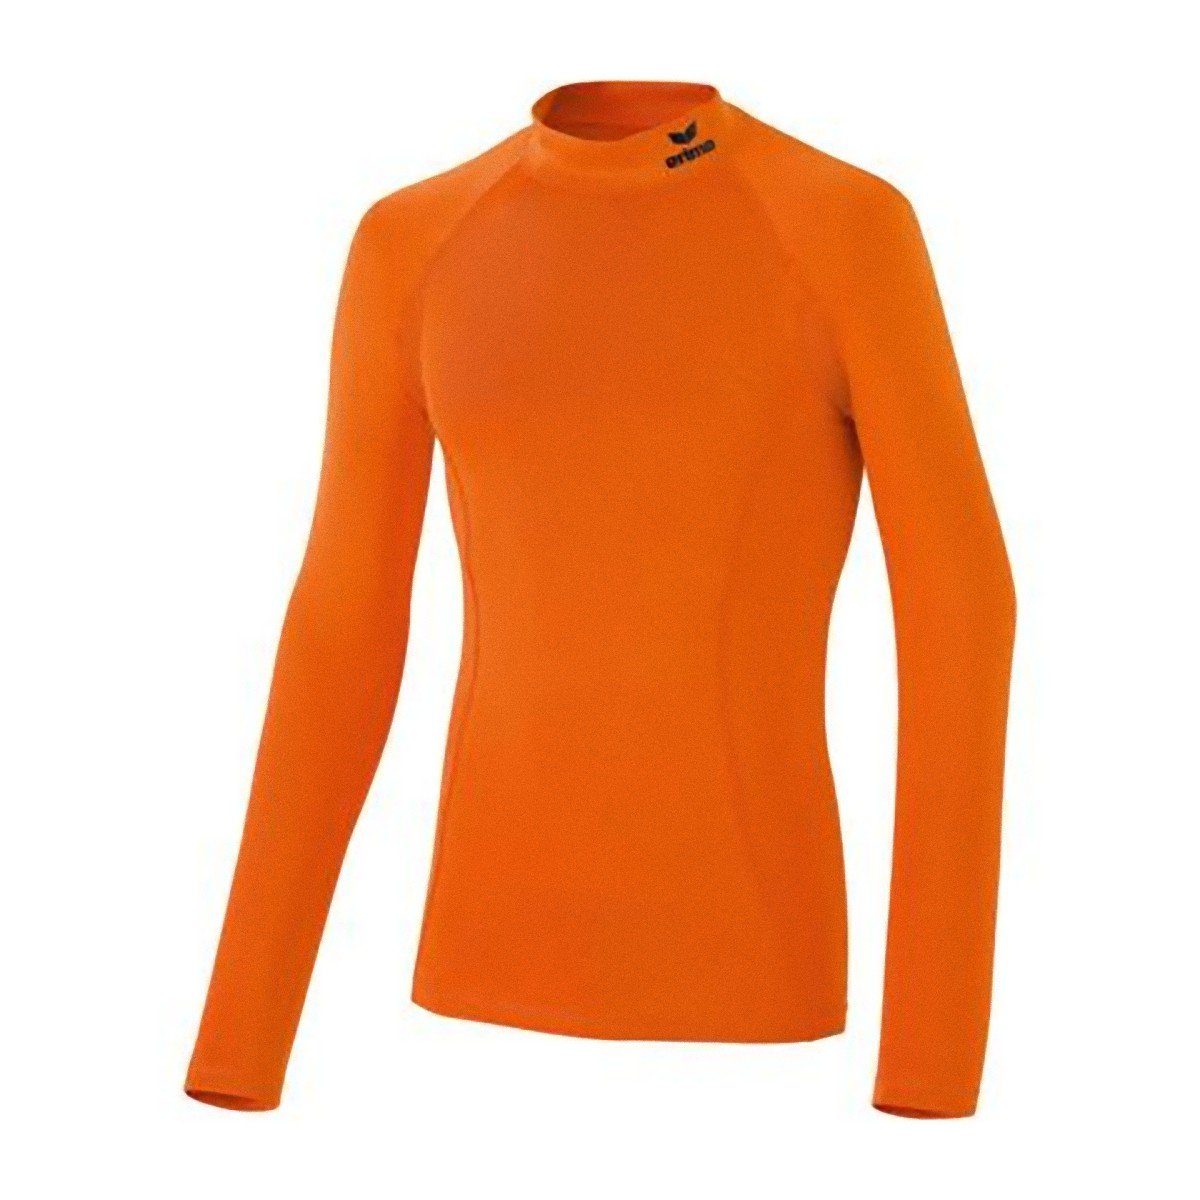 Erima Laufshirt Support Langarm Pullover Fussball Funktionsshirt Longsleeve Shirt Orange Sportshirt